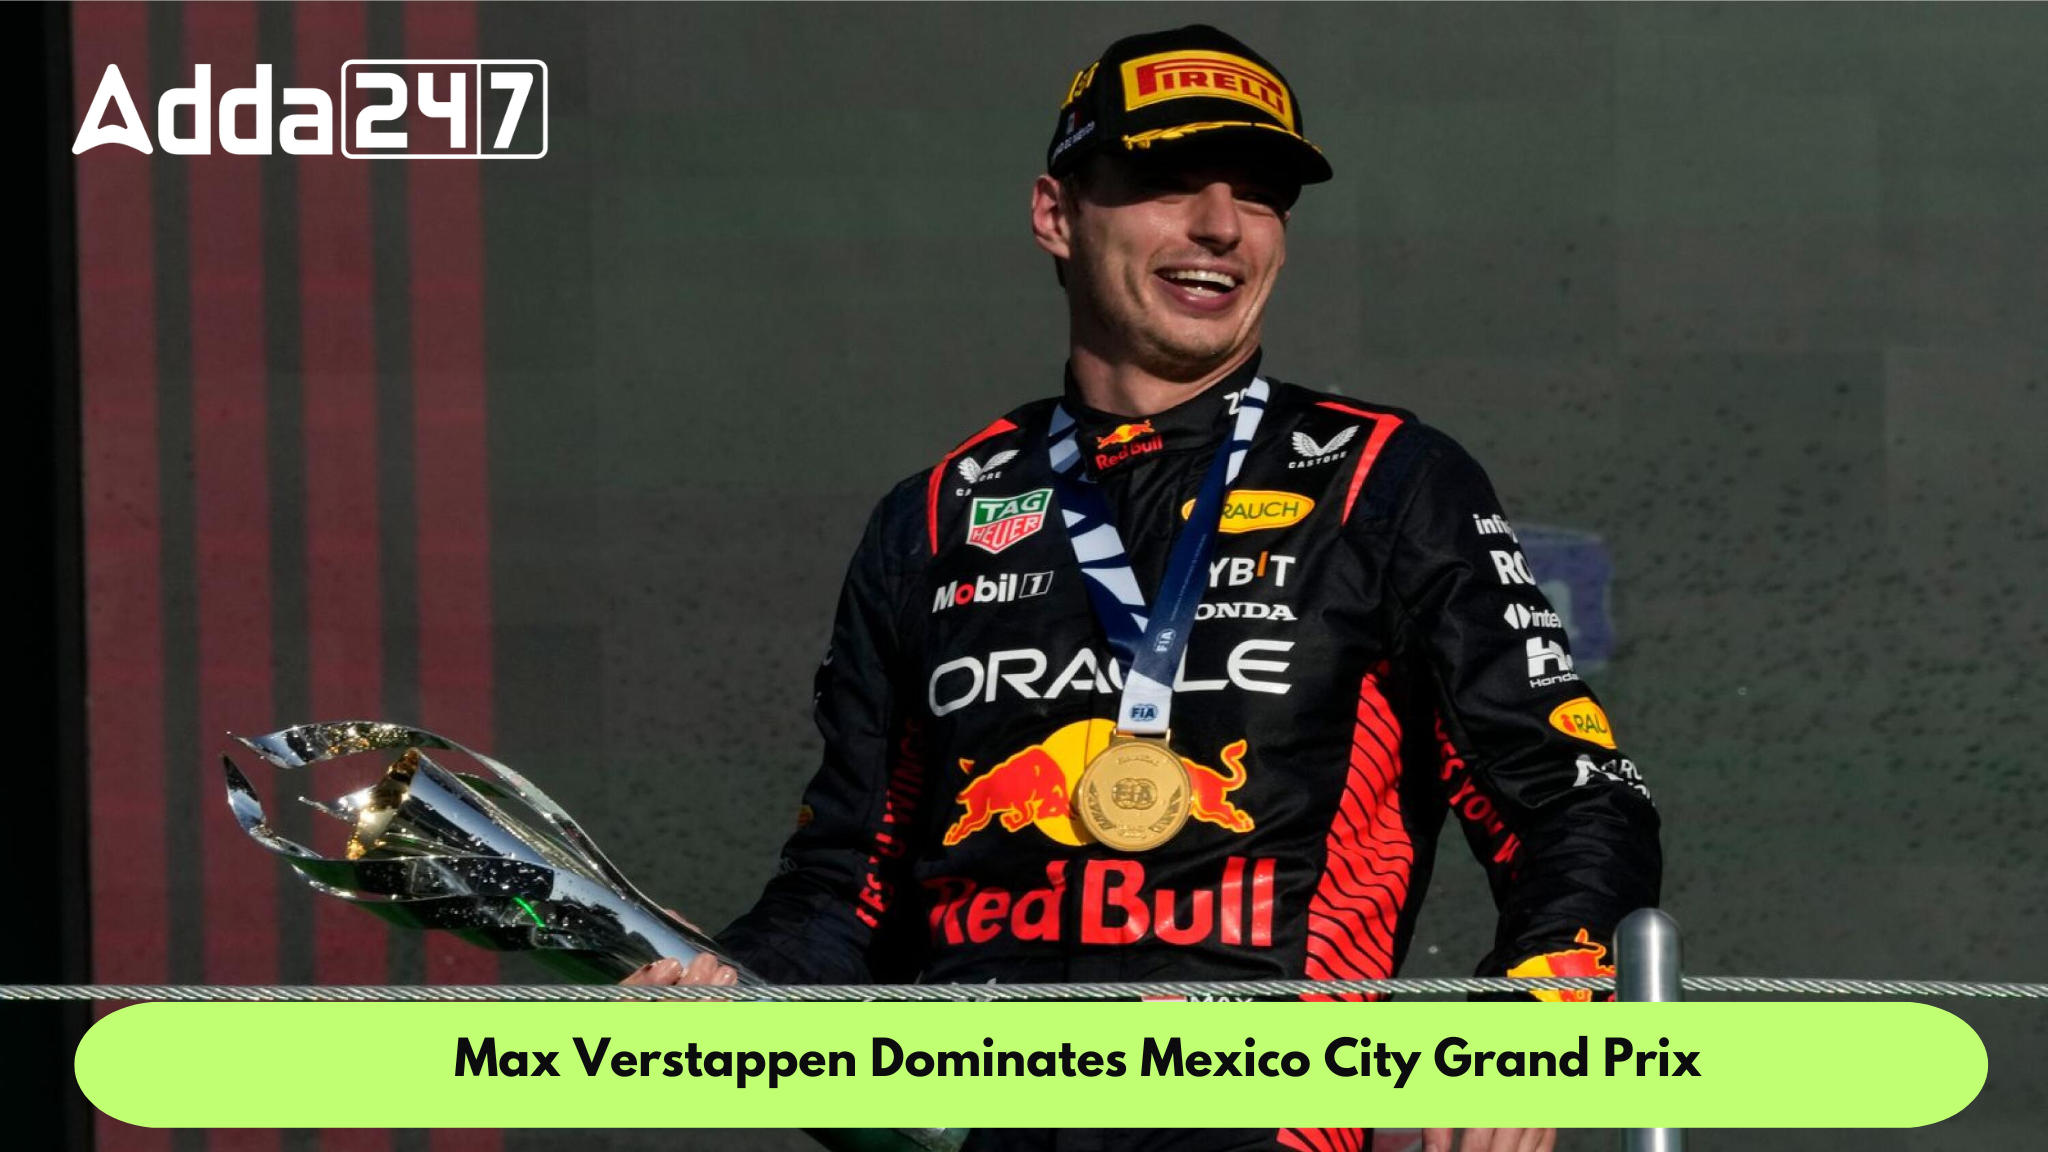 Max Verstappen Dominates Mexico City Grand Prix, Sets New Season Victory Record